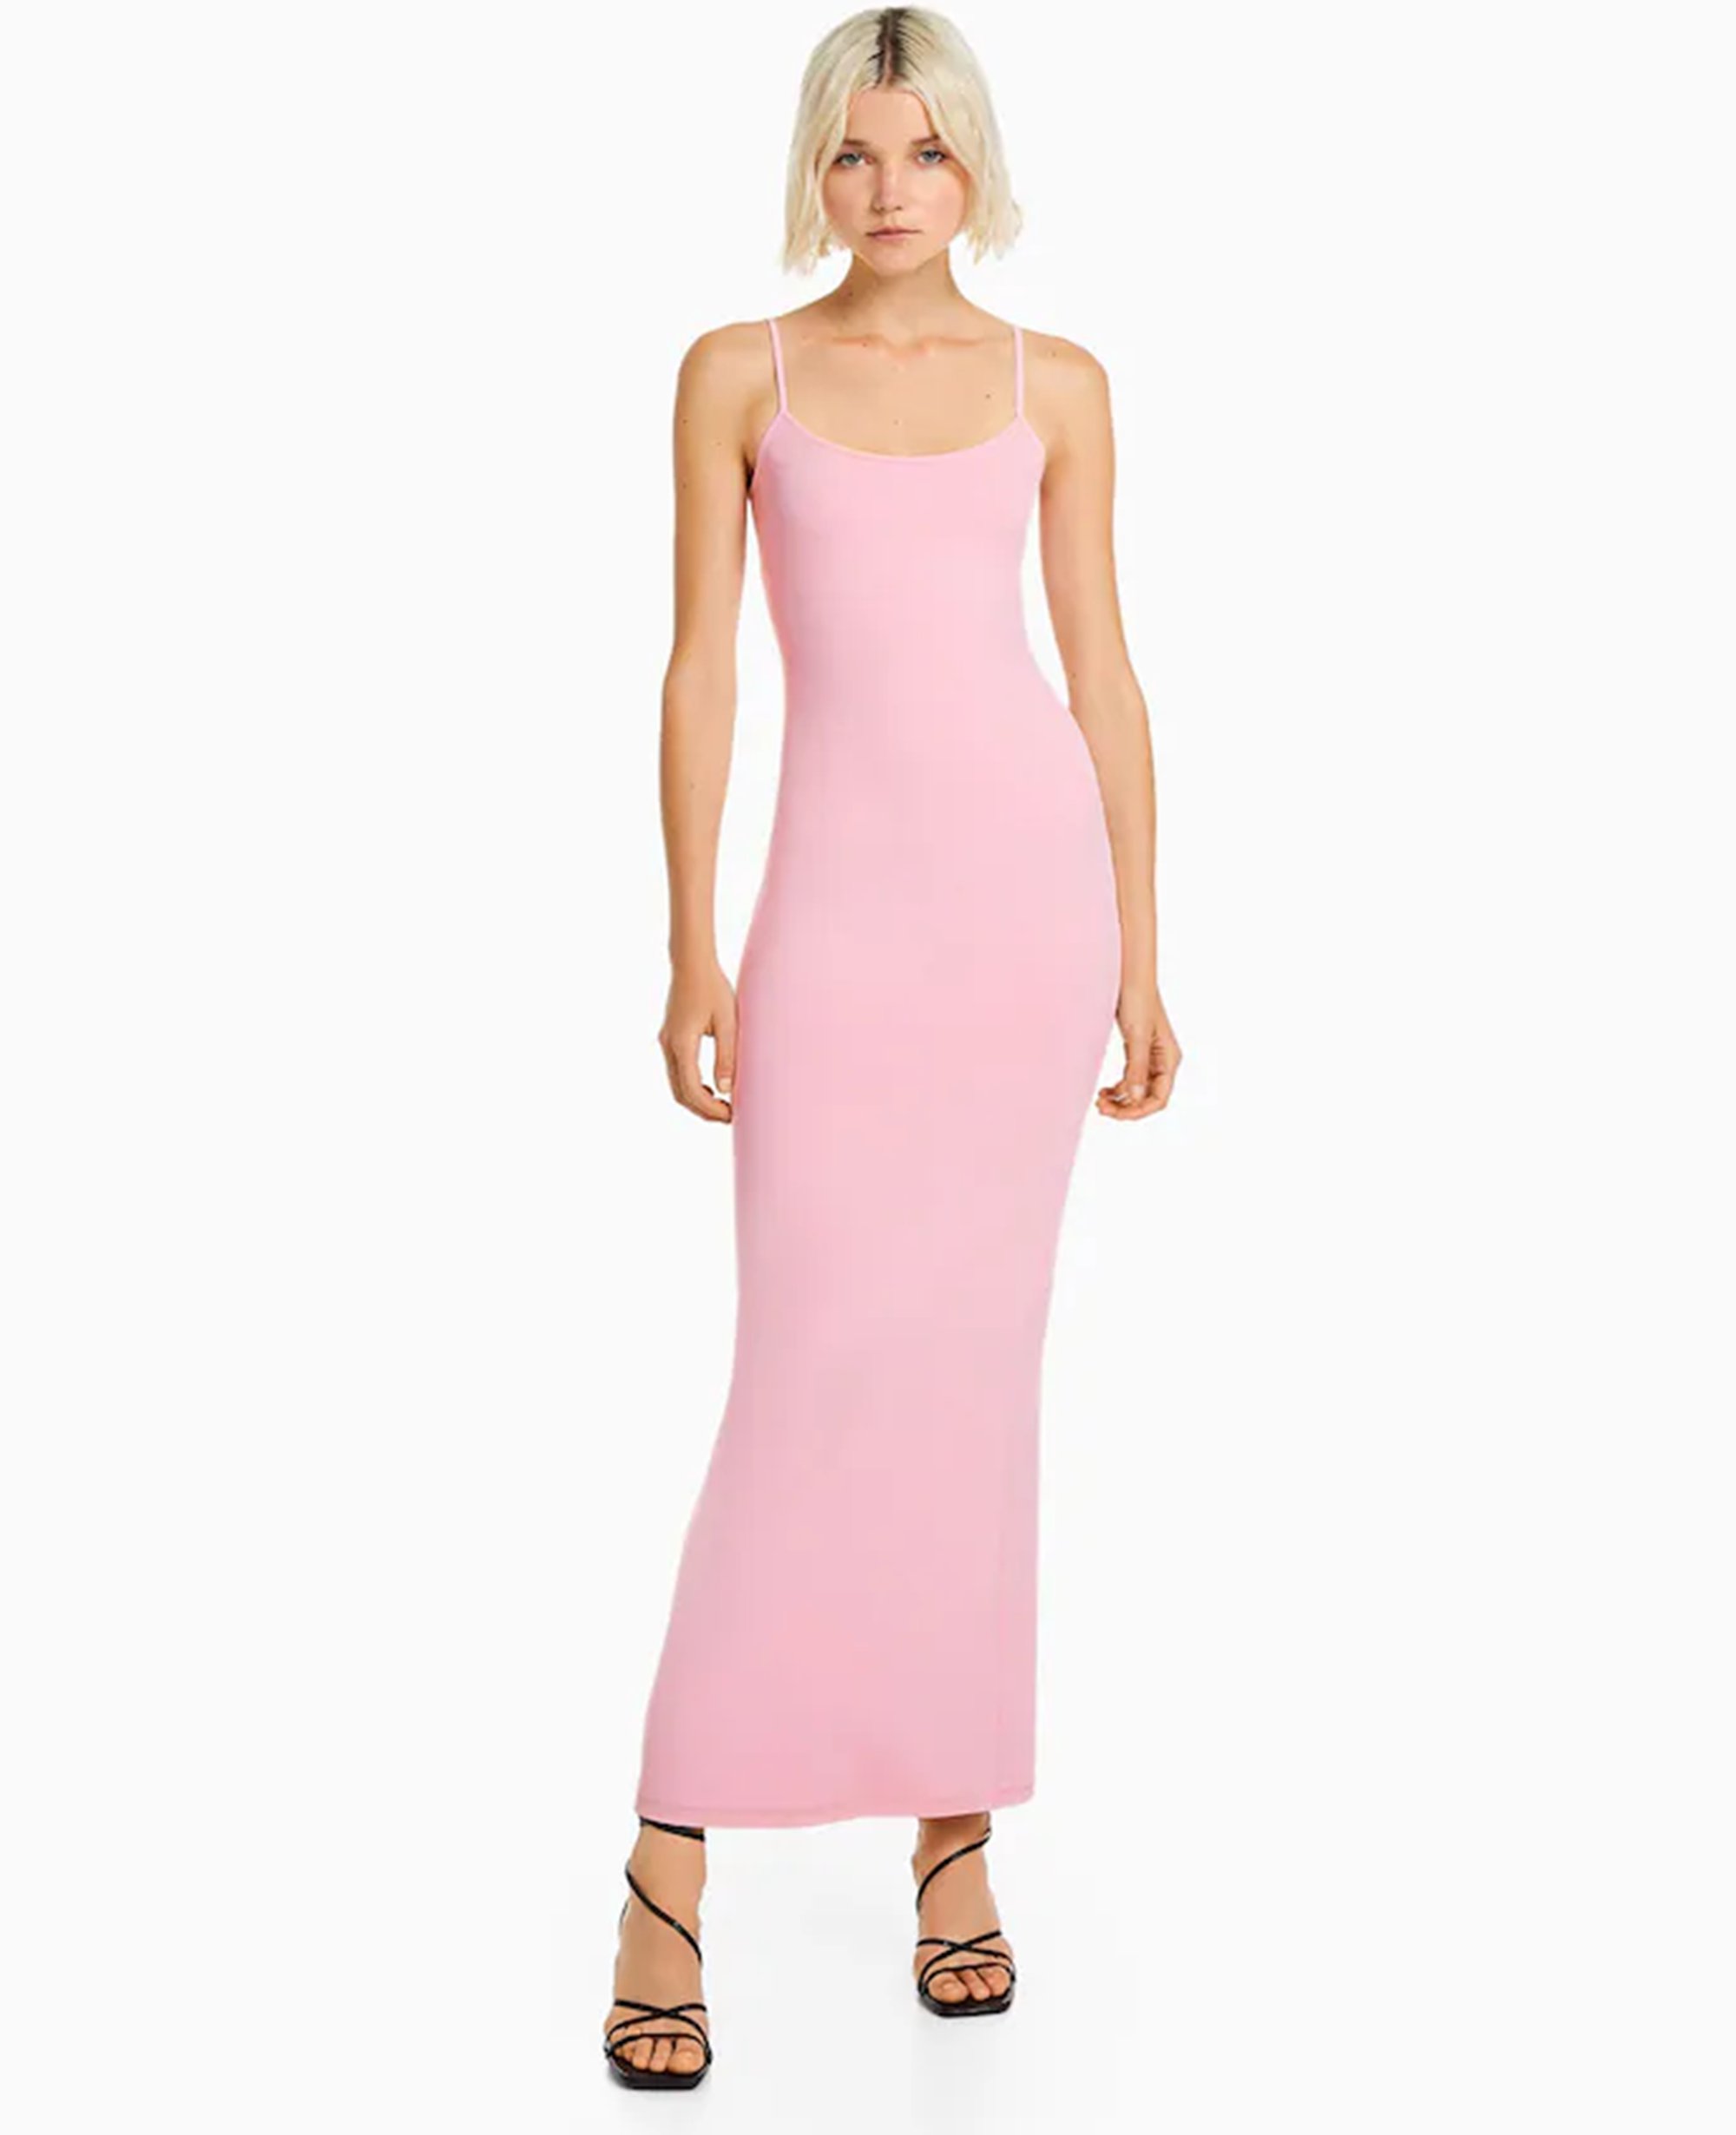 Skims Women's Plus Size 4x Shimmer Slip Dress Camel Color